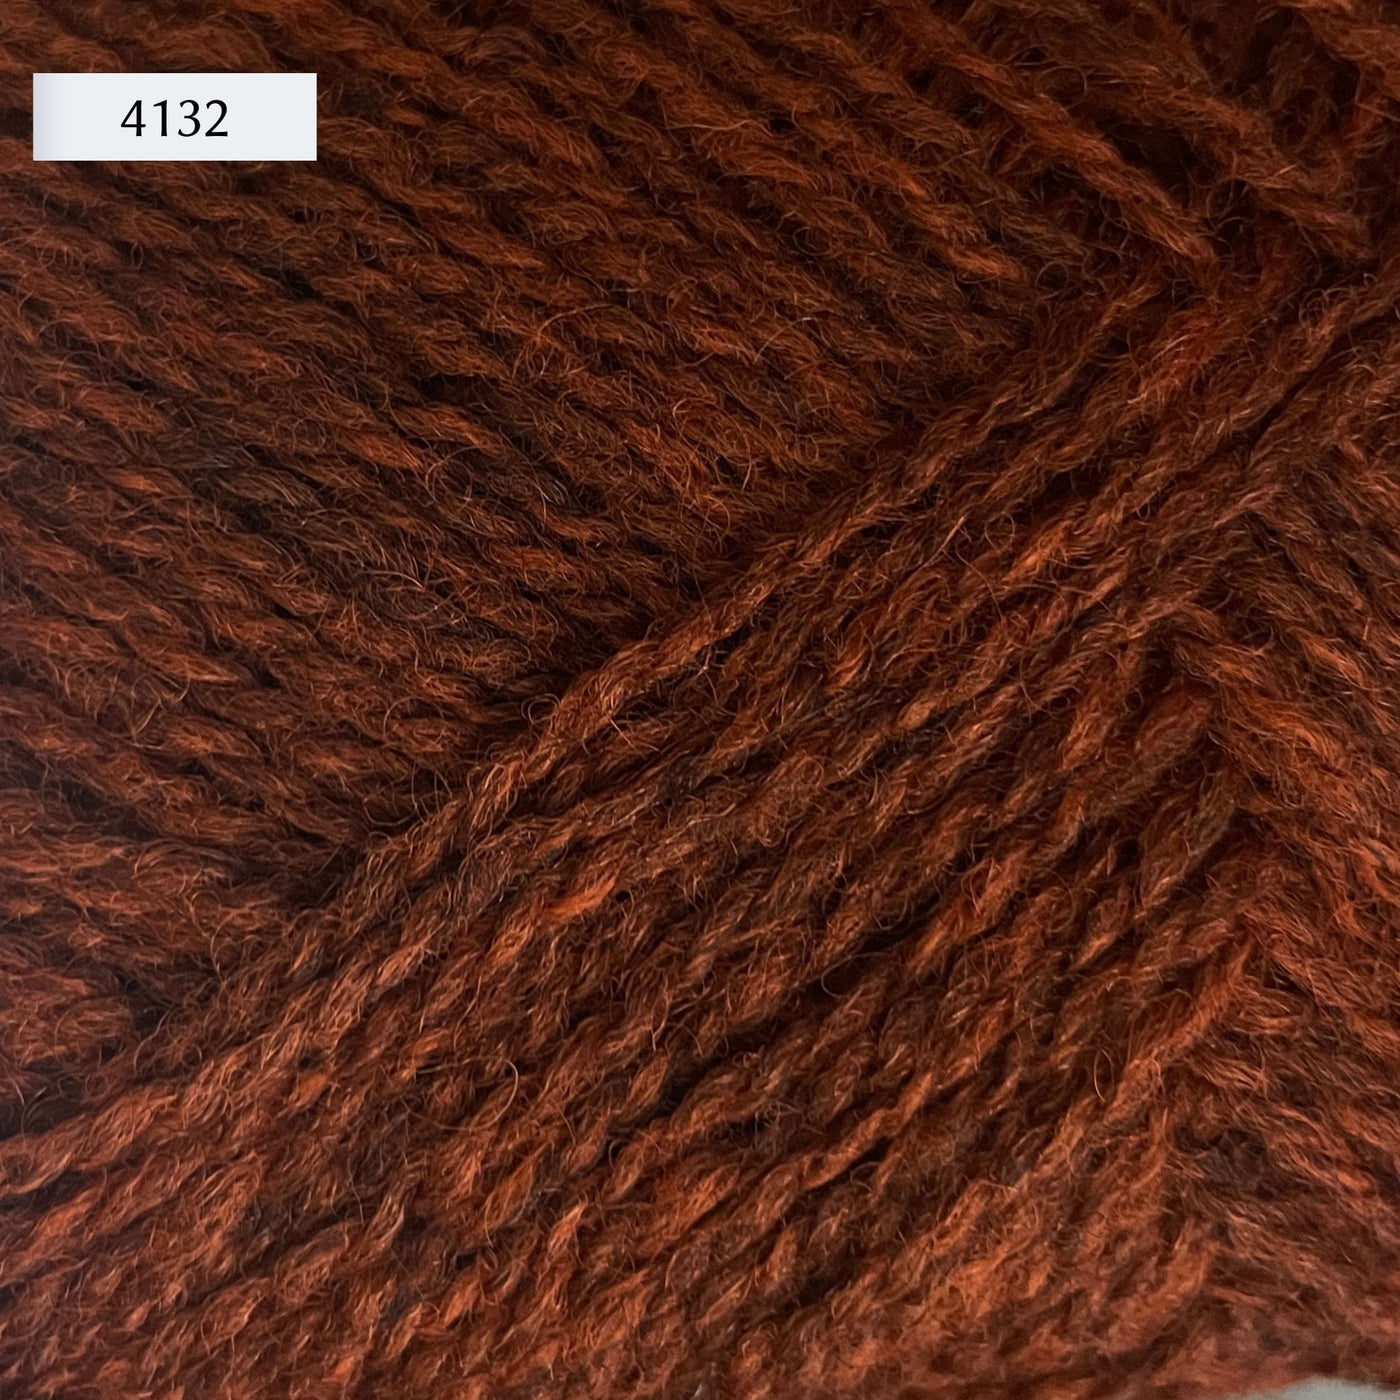 Rauma Finullgarn, a fingering/sport weight yarn, in color 4132, a heathered copper